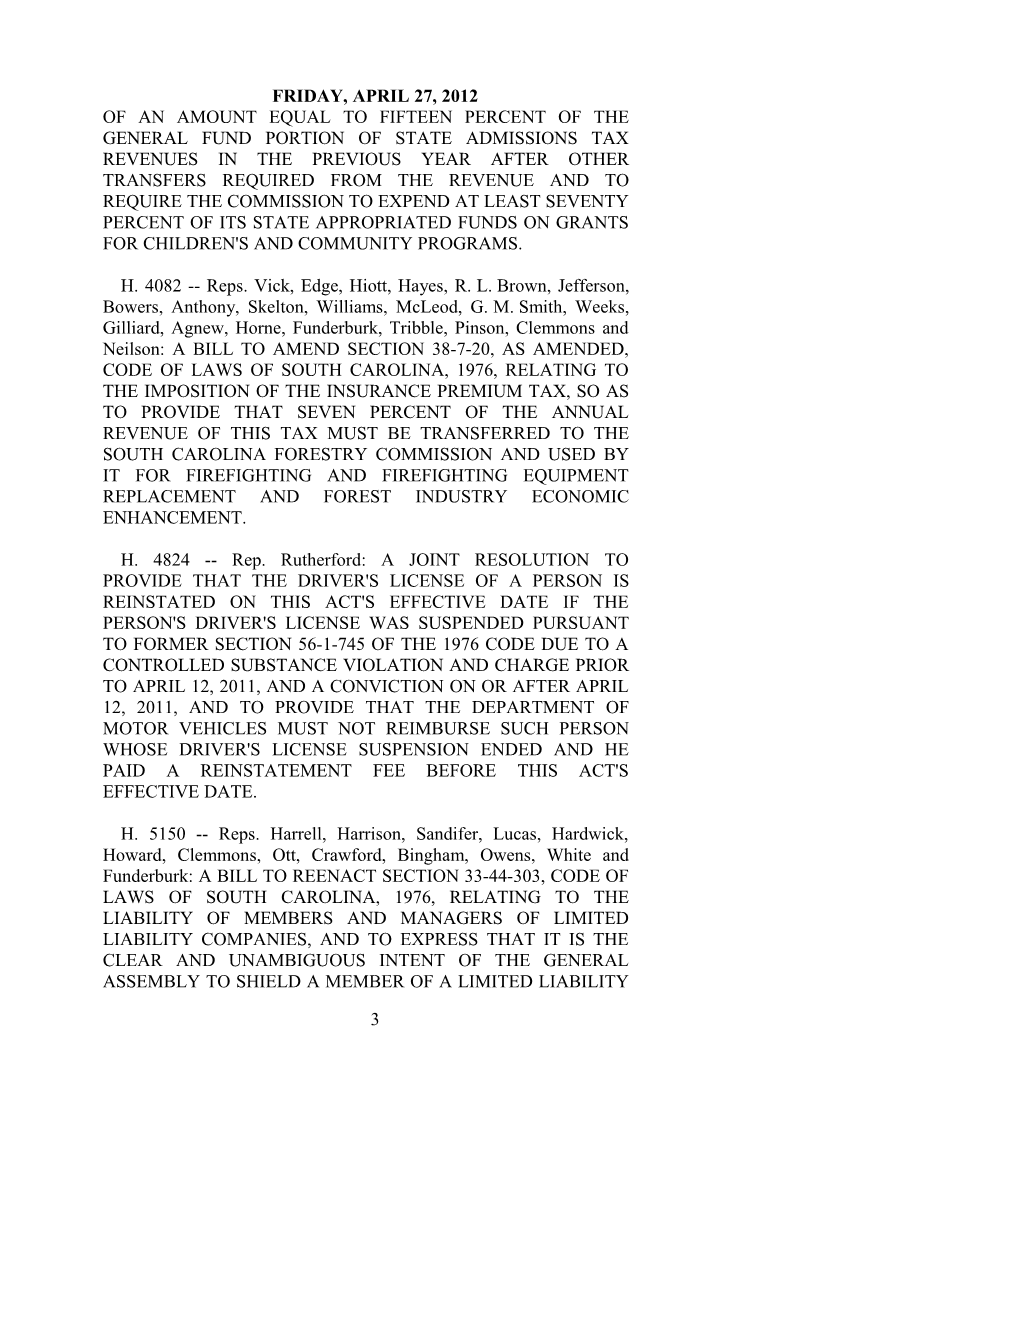 House Journal for Apr. 27, 2012 - South Carolina Legislature Online